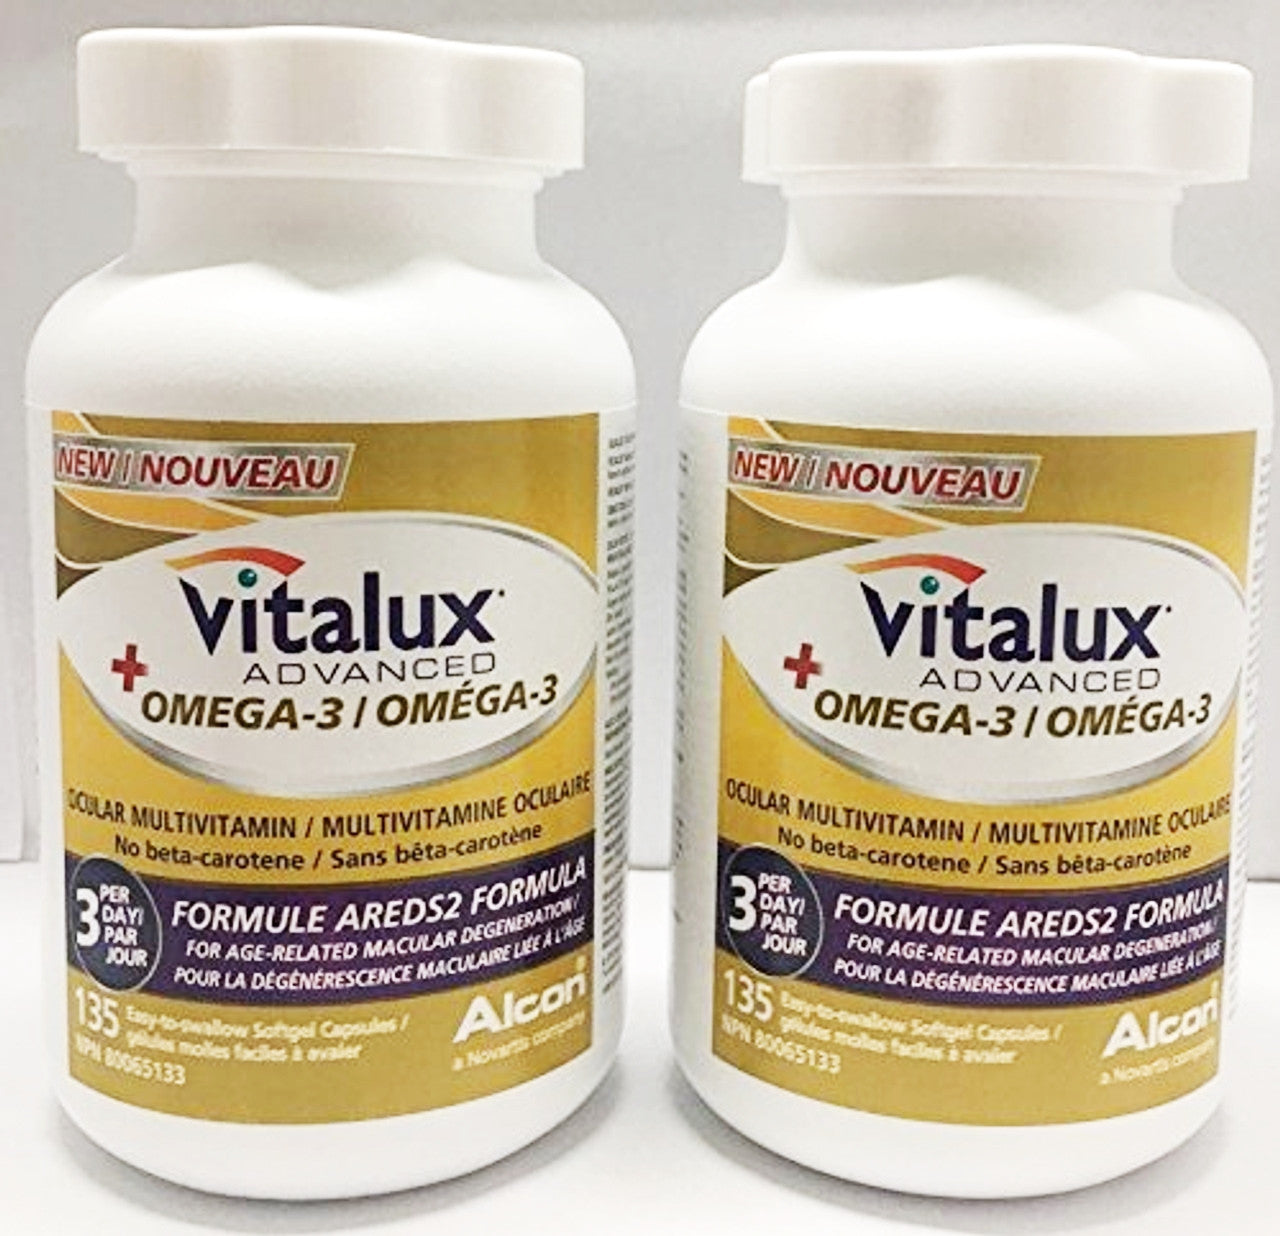 Vitalux Advanced Plus Omgea-3 OCULAR MULTIVITAMIN (No beta-carotene), 135 easy-to-swallow softgel capsules (2pk)